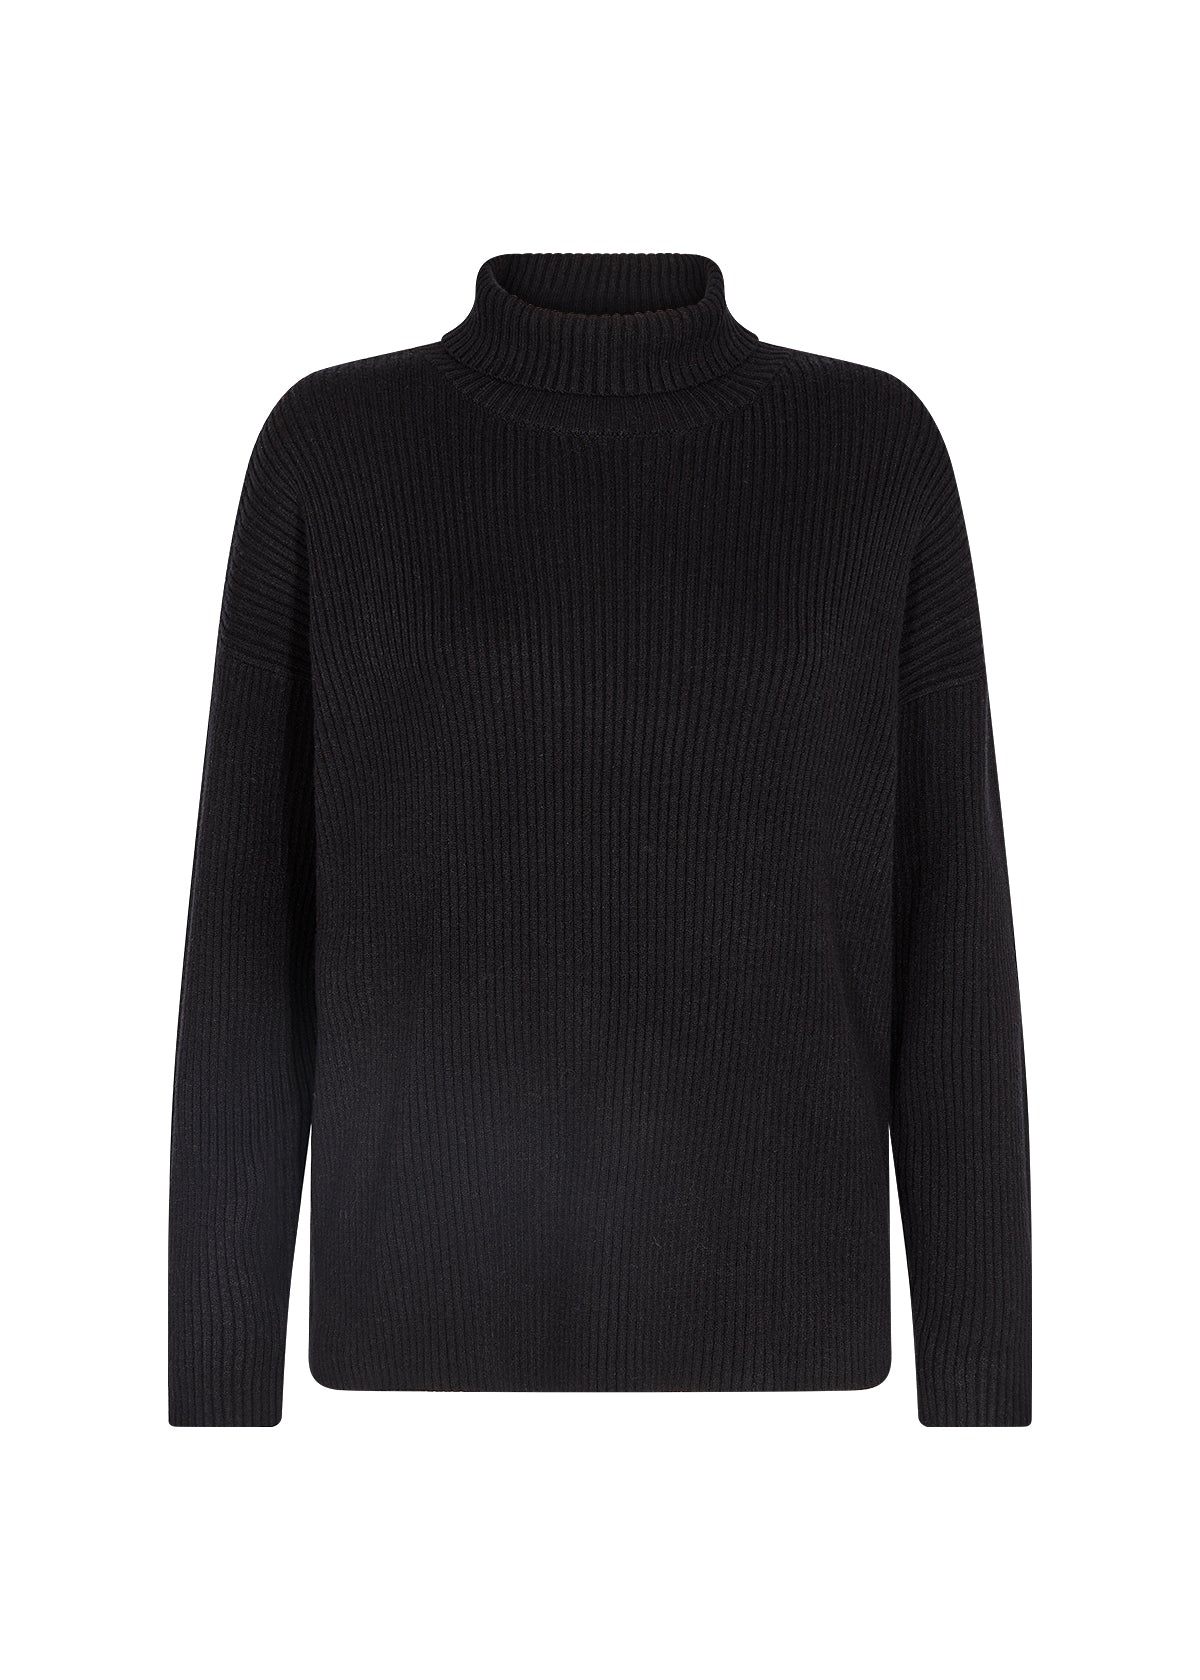 The Estelle Sweater-Black